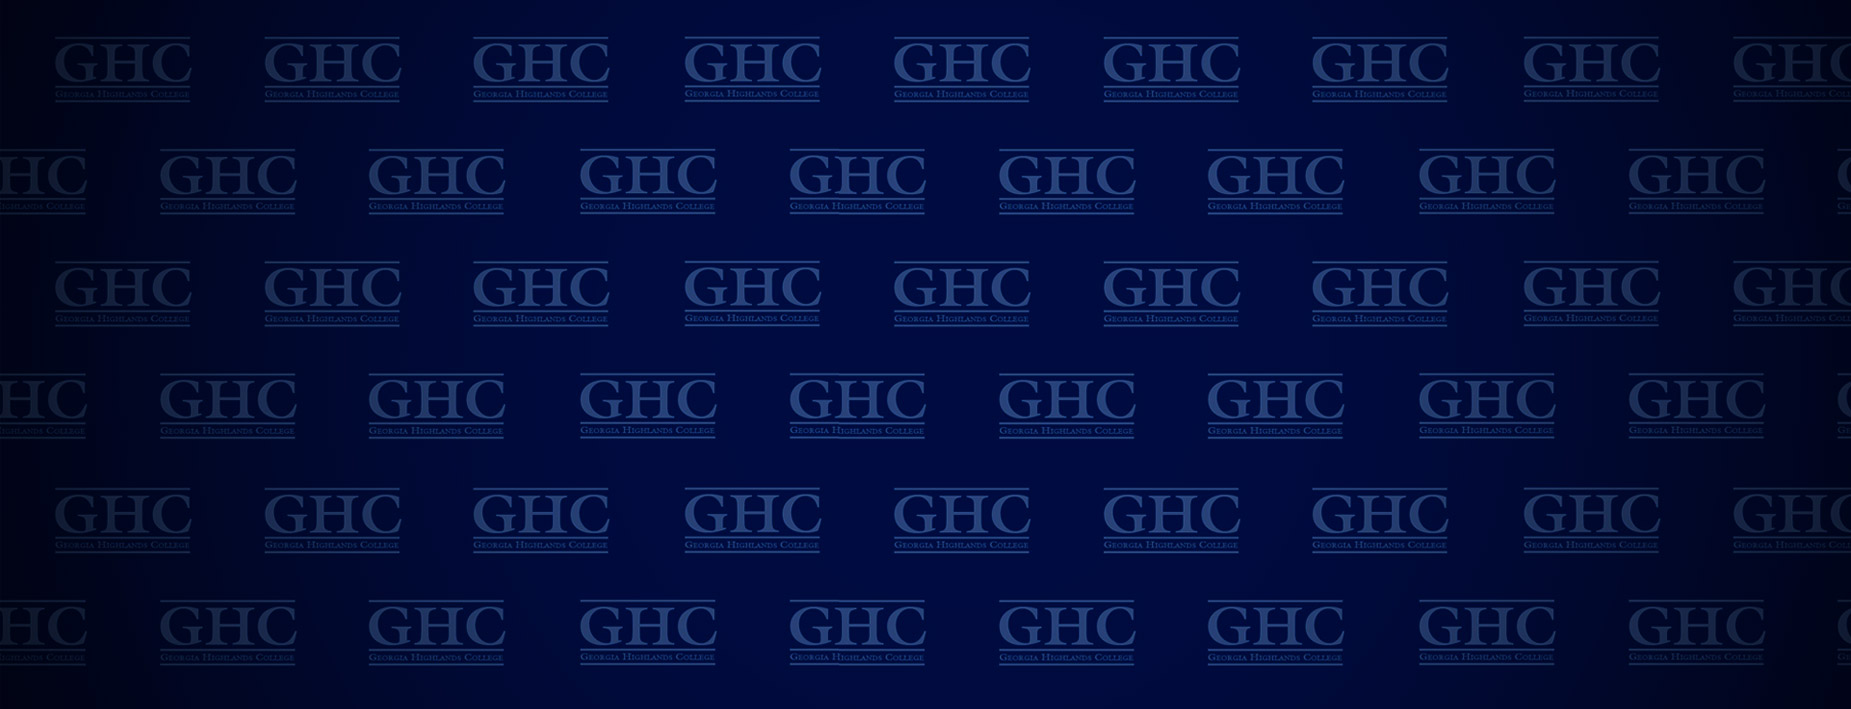 tiled blue ghc logo background